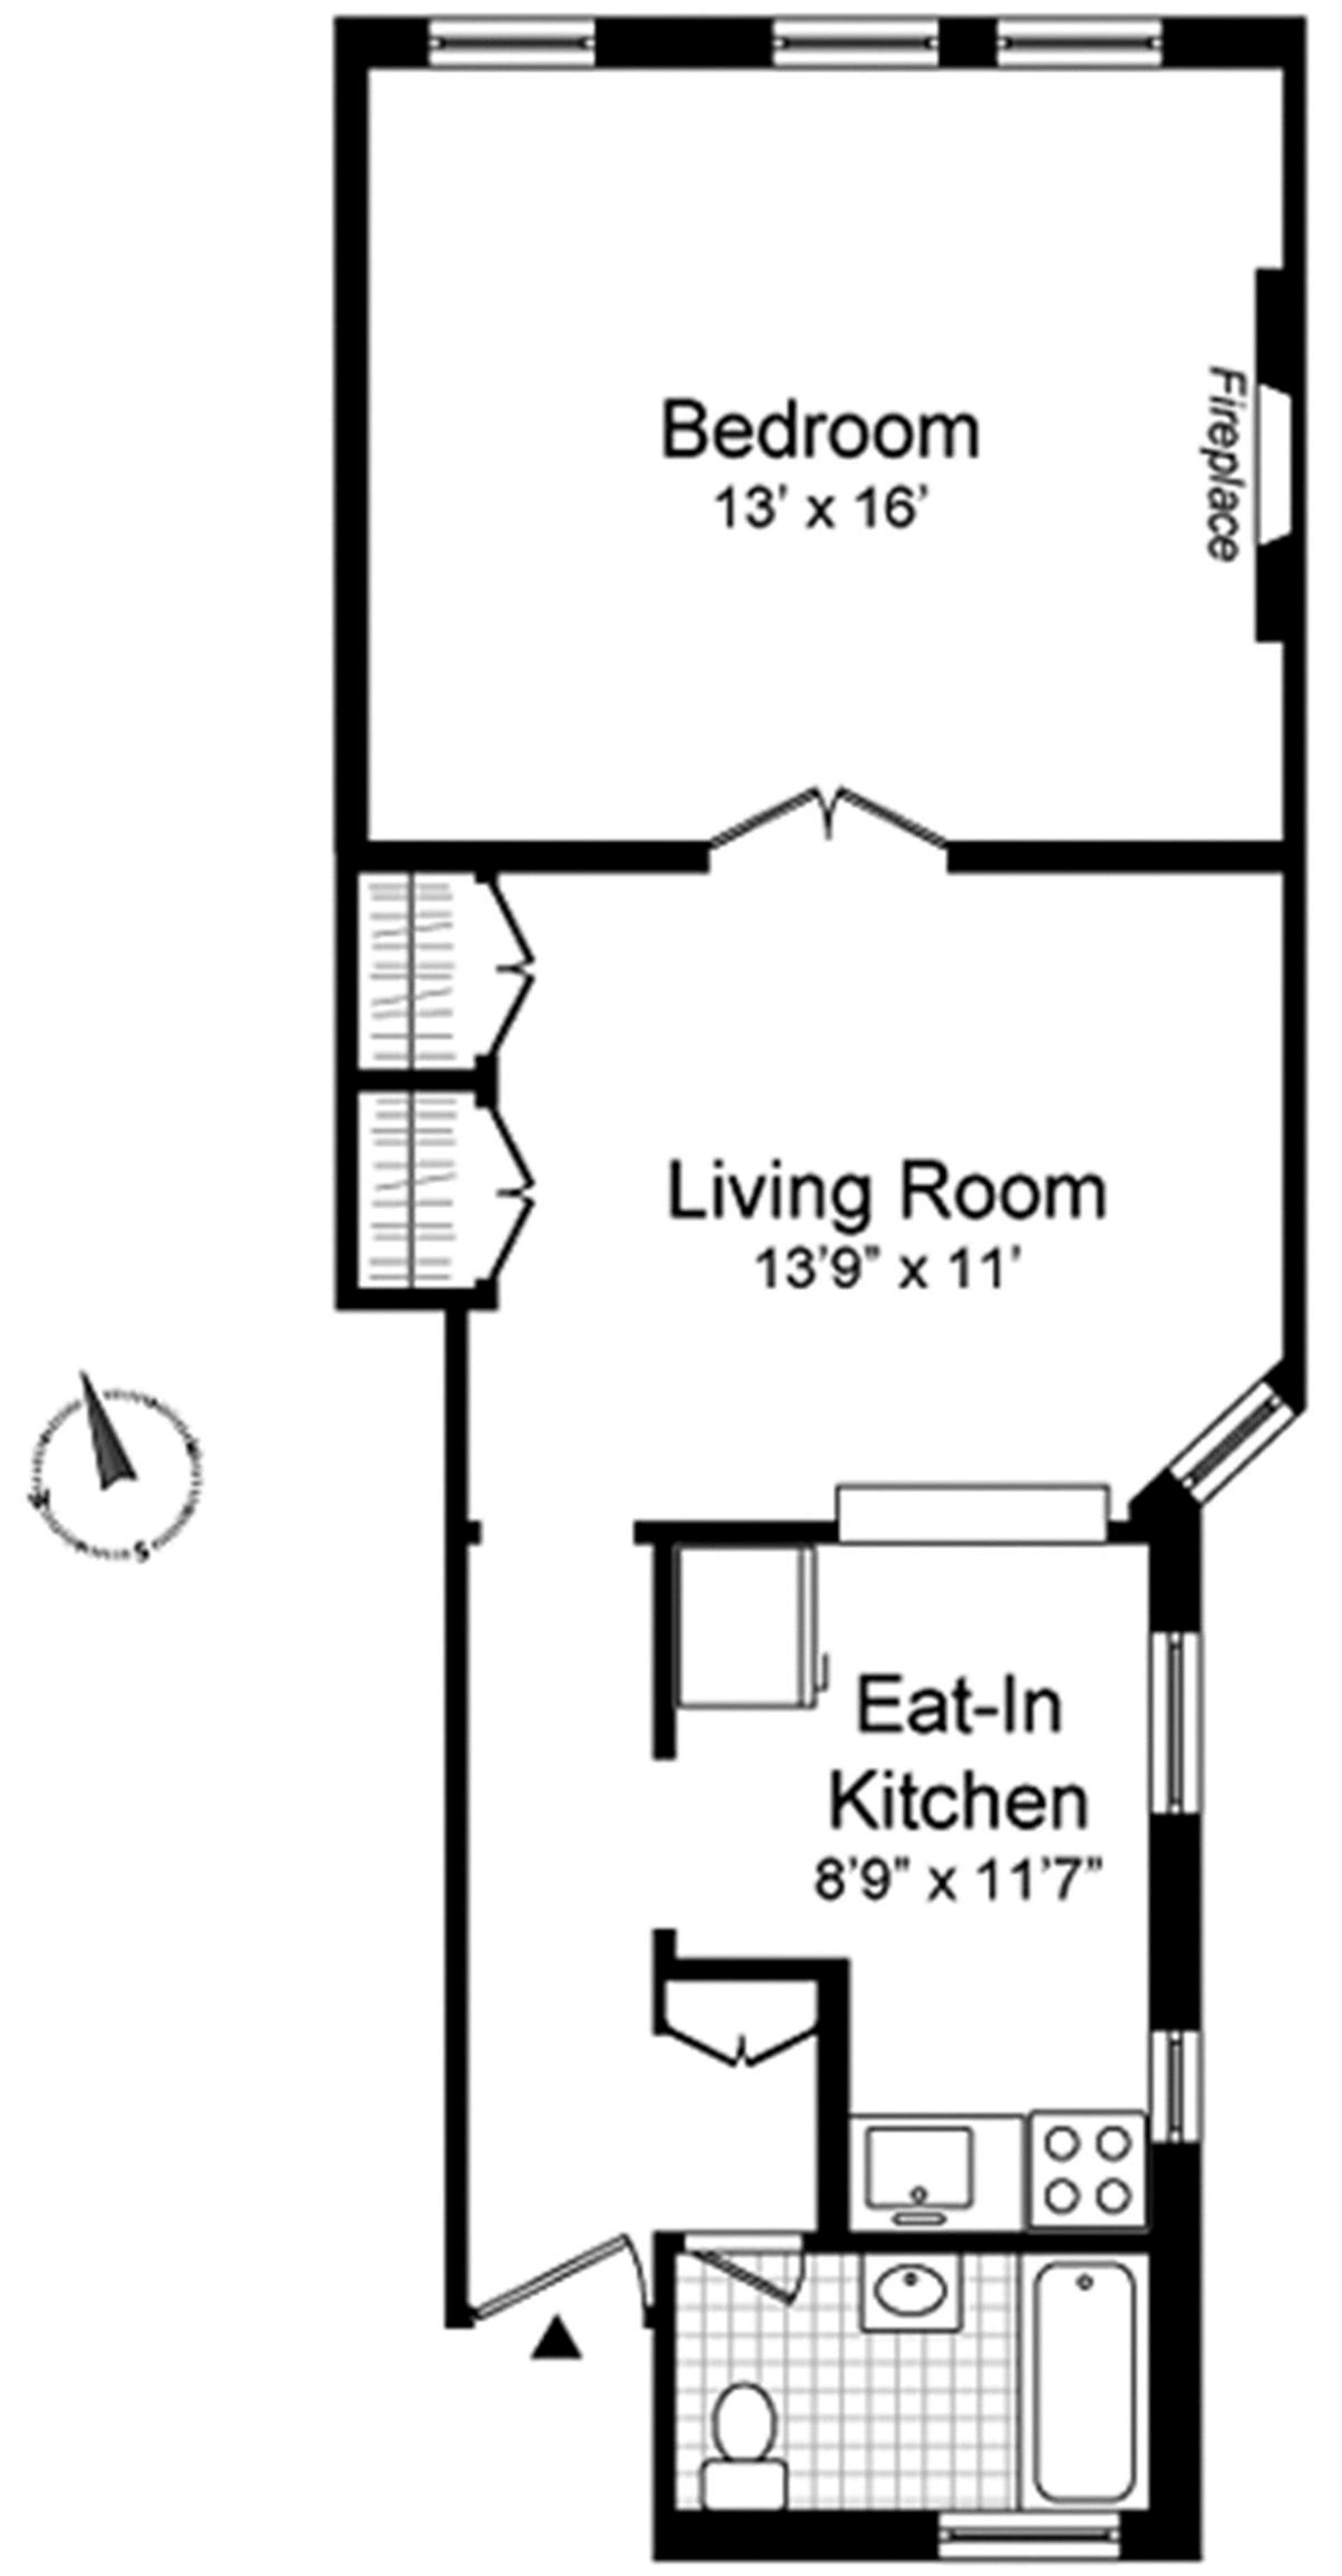 Floorplan for 436 East 58th Street, 3A